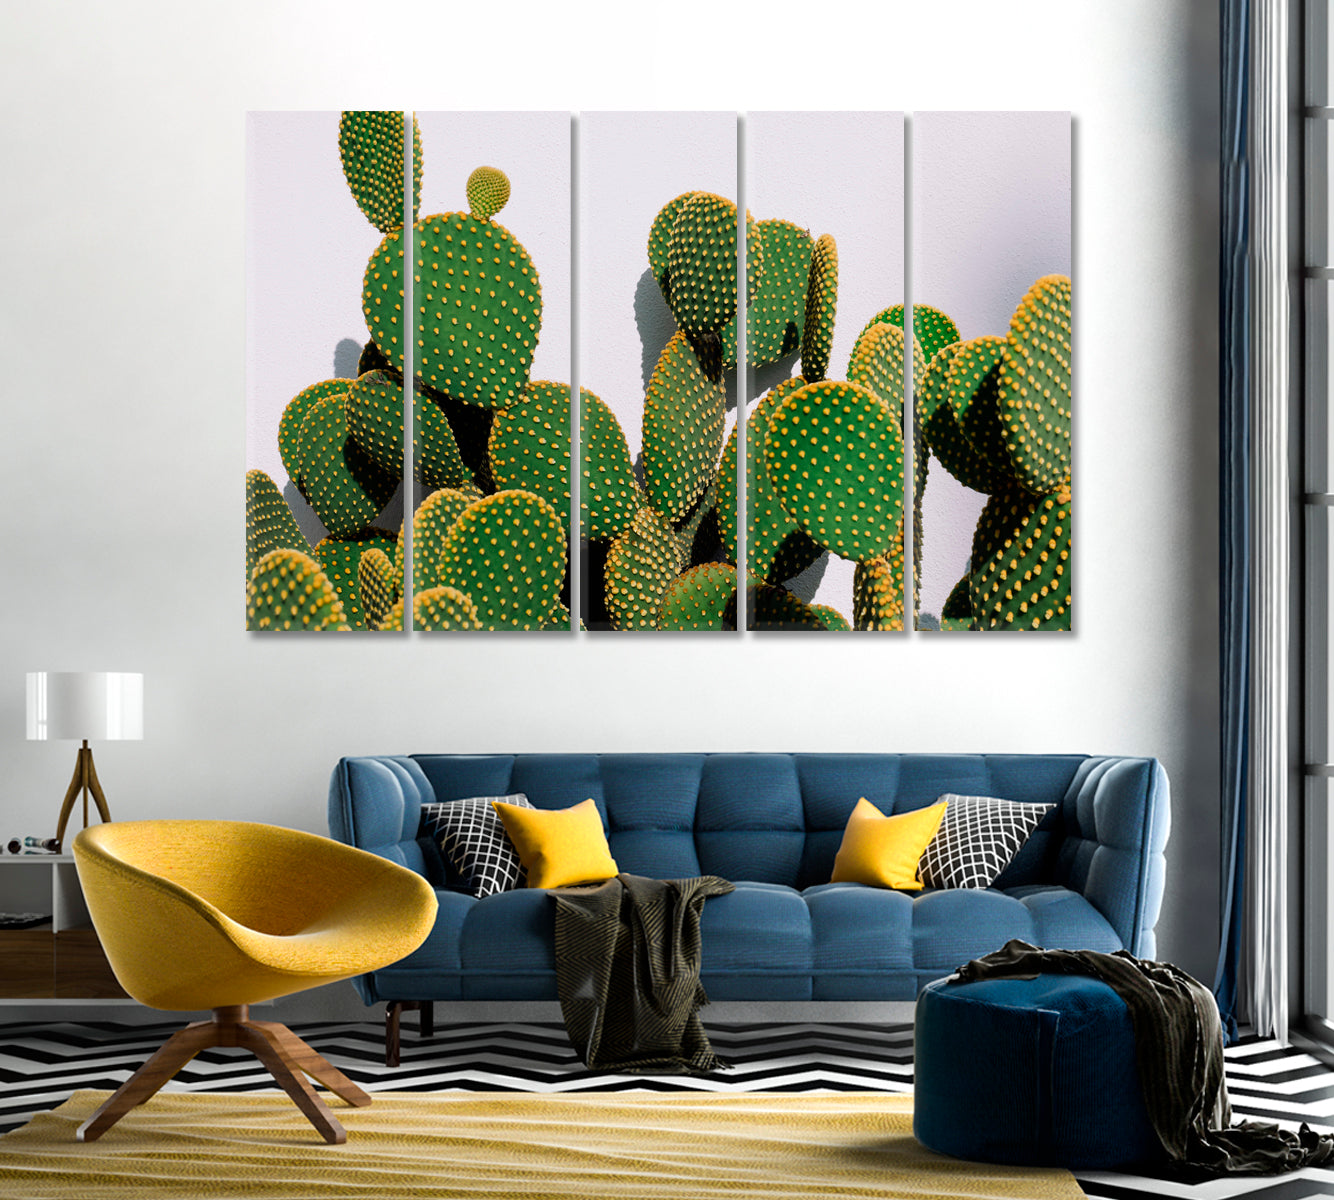 Bunny Ear Cactus Wall Decor Canvas-Canvas Print-CetArt-1 Panel-24x16 inches-CetArt